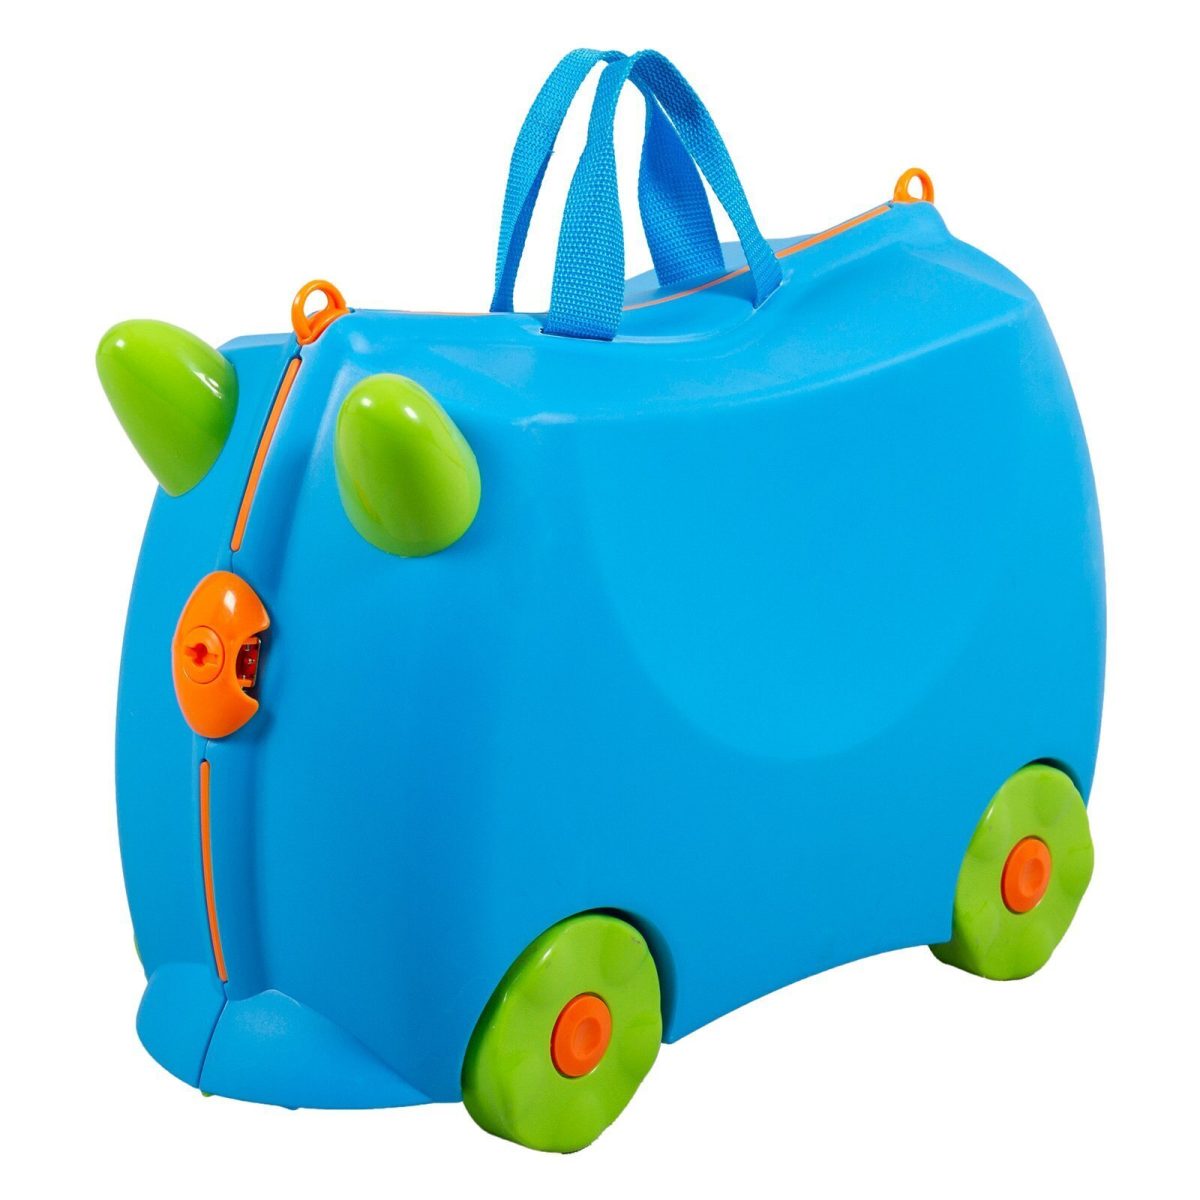 Kids Ride On Suitcase Luggage Travel Bag